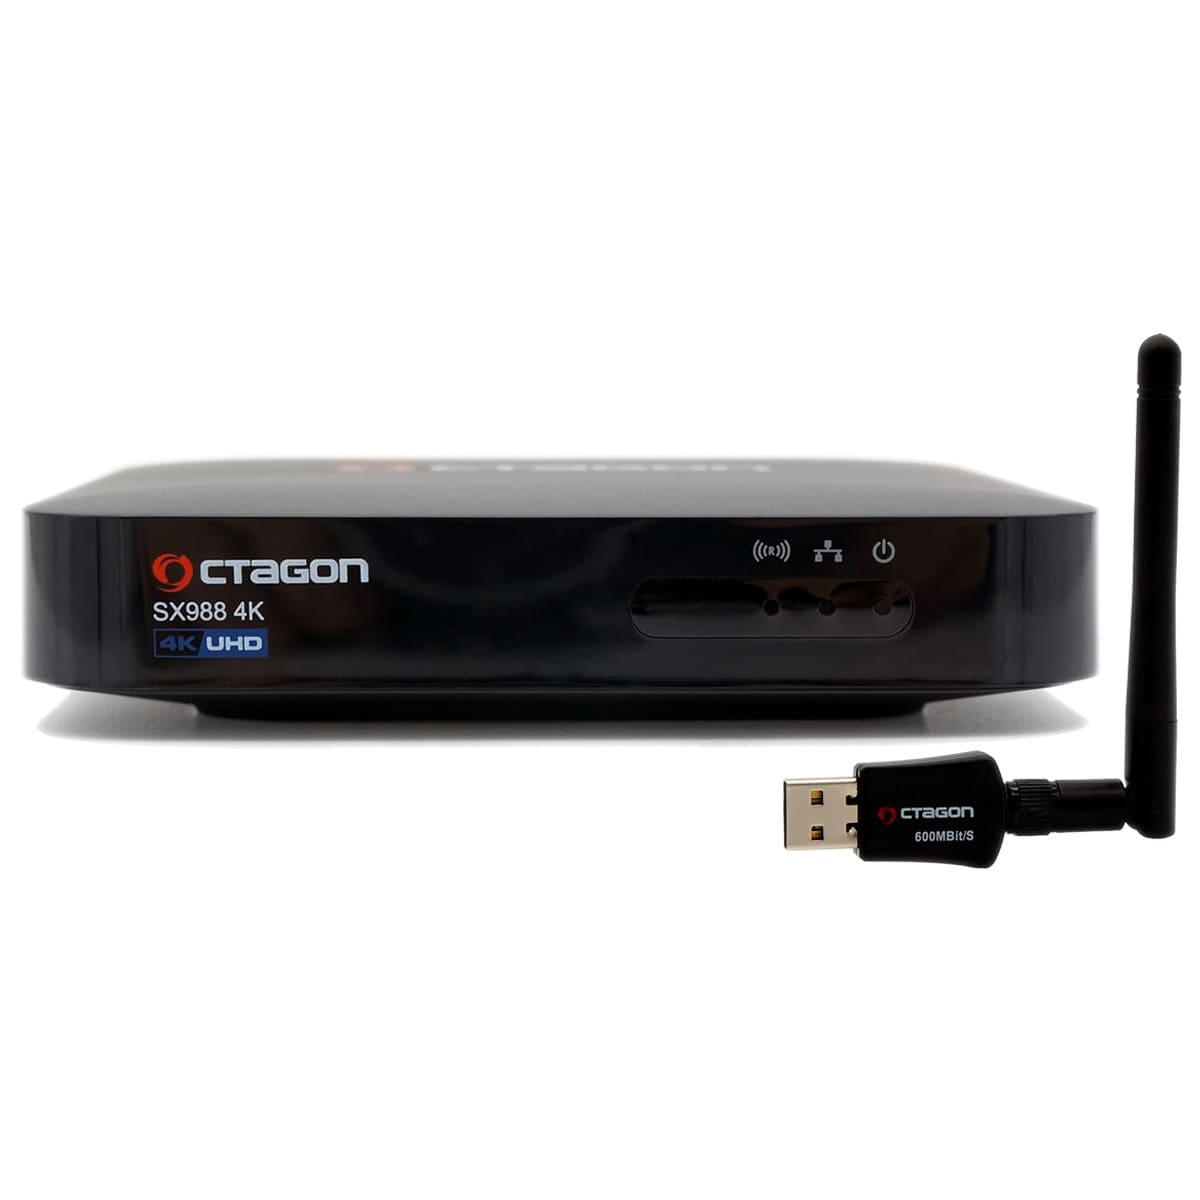 OCTAGON SX988 IP Wifi Mbit/s GB 8 600